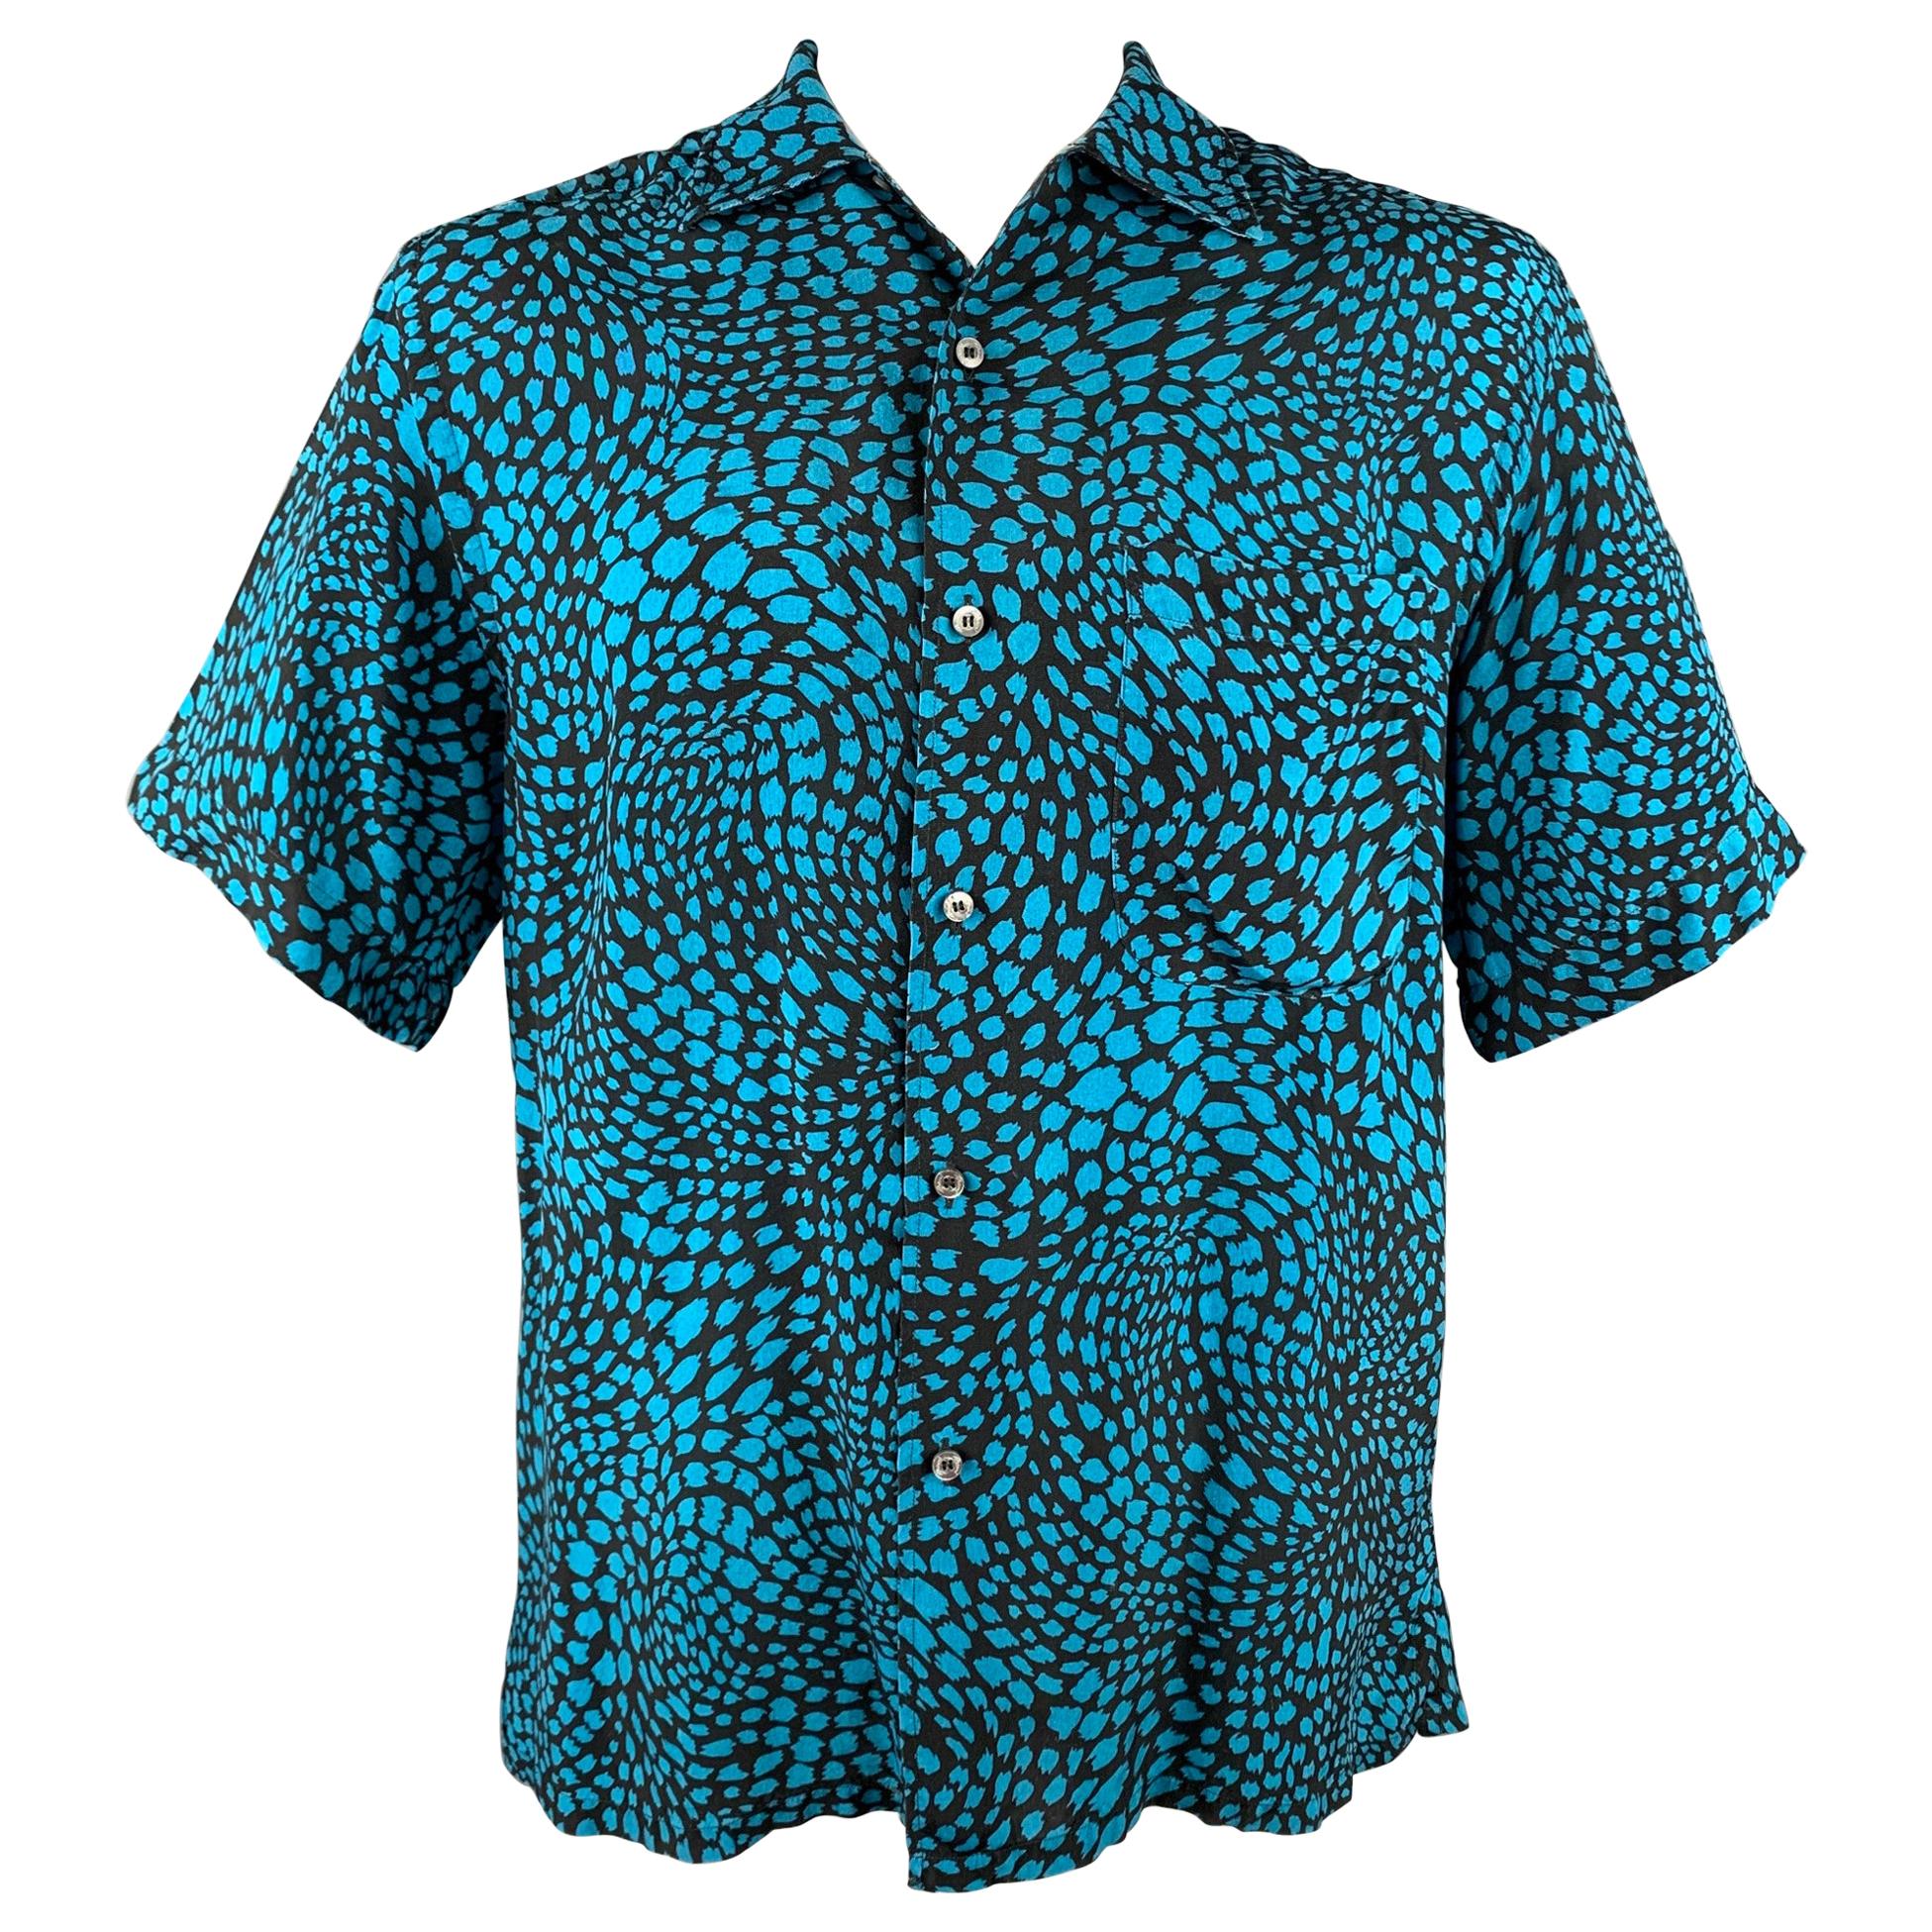 BRIONI for NEIMAN MARCUS Size M Aqua & Black Print Rayon Button Up Shirt